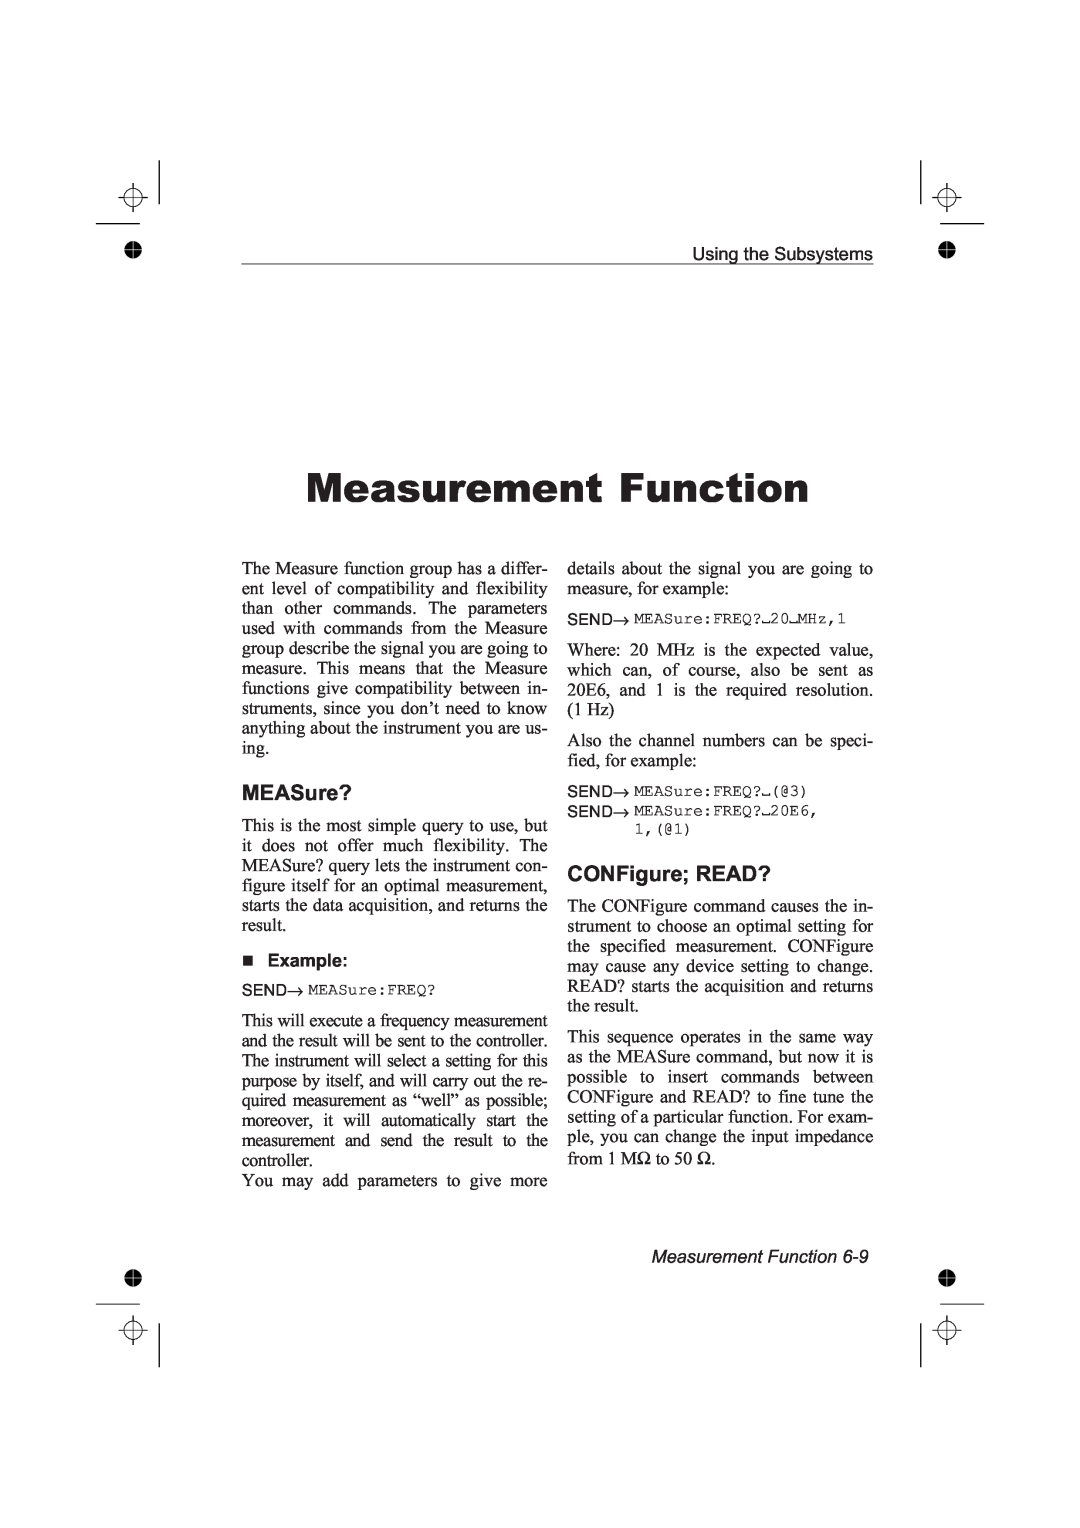 Fluke PM6681R, PM6685R manual Measurement Function, MEASure?, CONFigure READ?, Example 